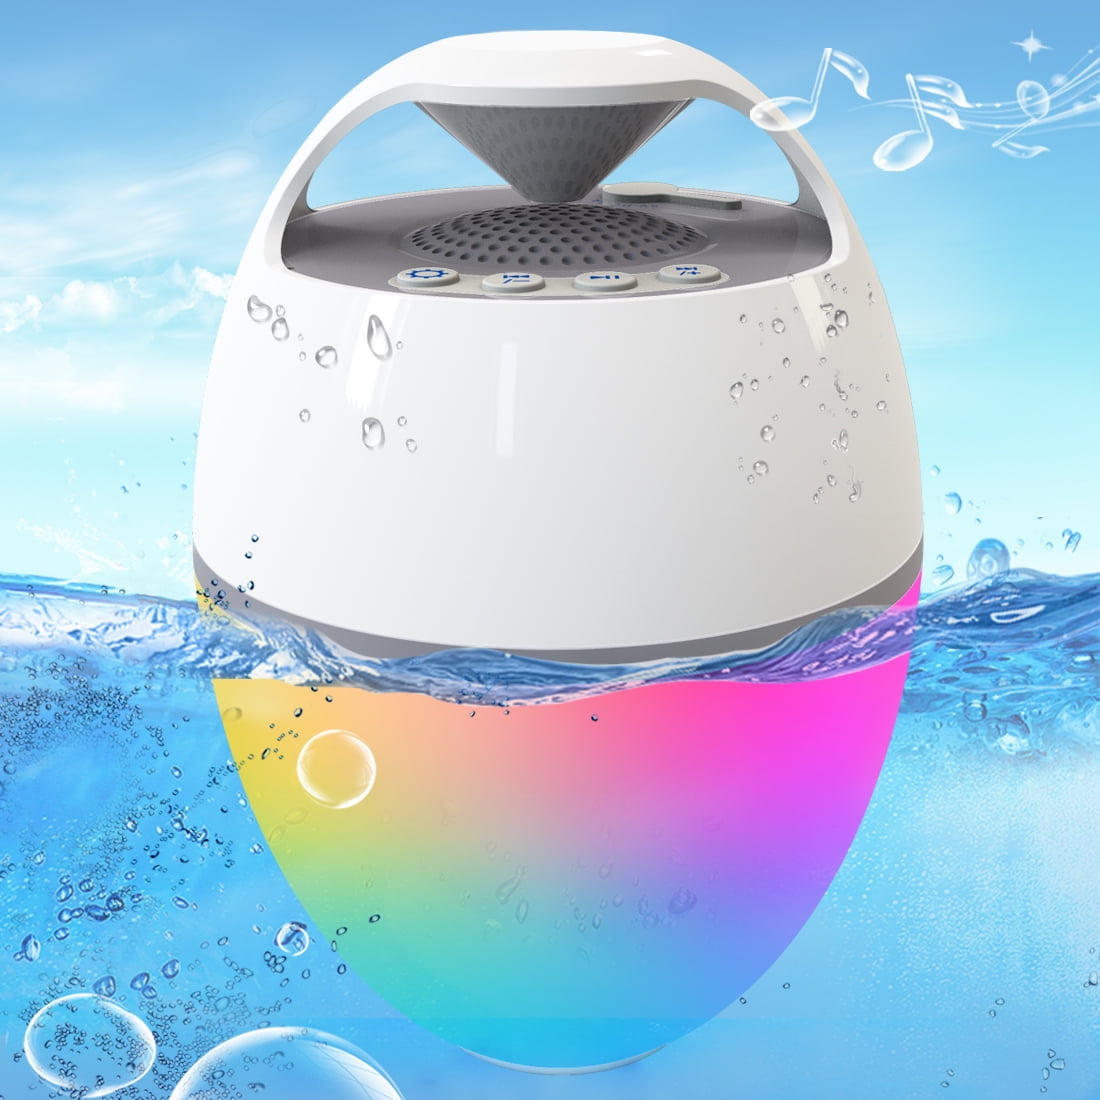 Blufree Floating Pool Speaker IP67 Waterproof Speaker,Louder Volume,Mic,82ft Wireless Range Hot Tub Speaker for Outdoor Pool Home Party Travel. Portable Bluetooth Speaker with Colorful Lights 